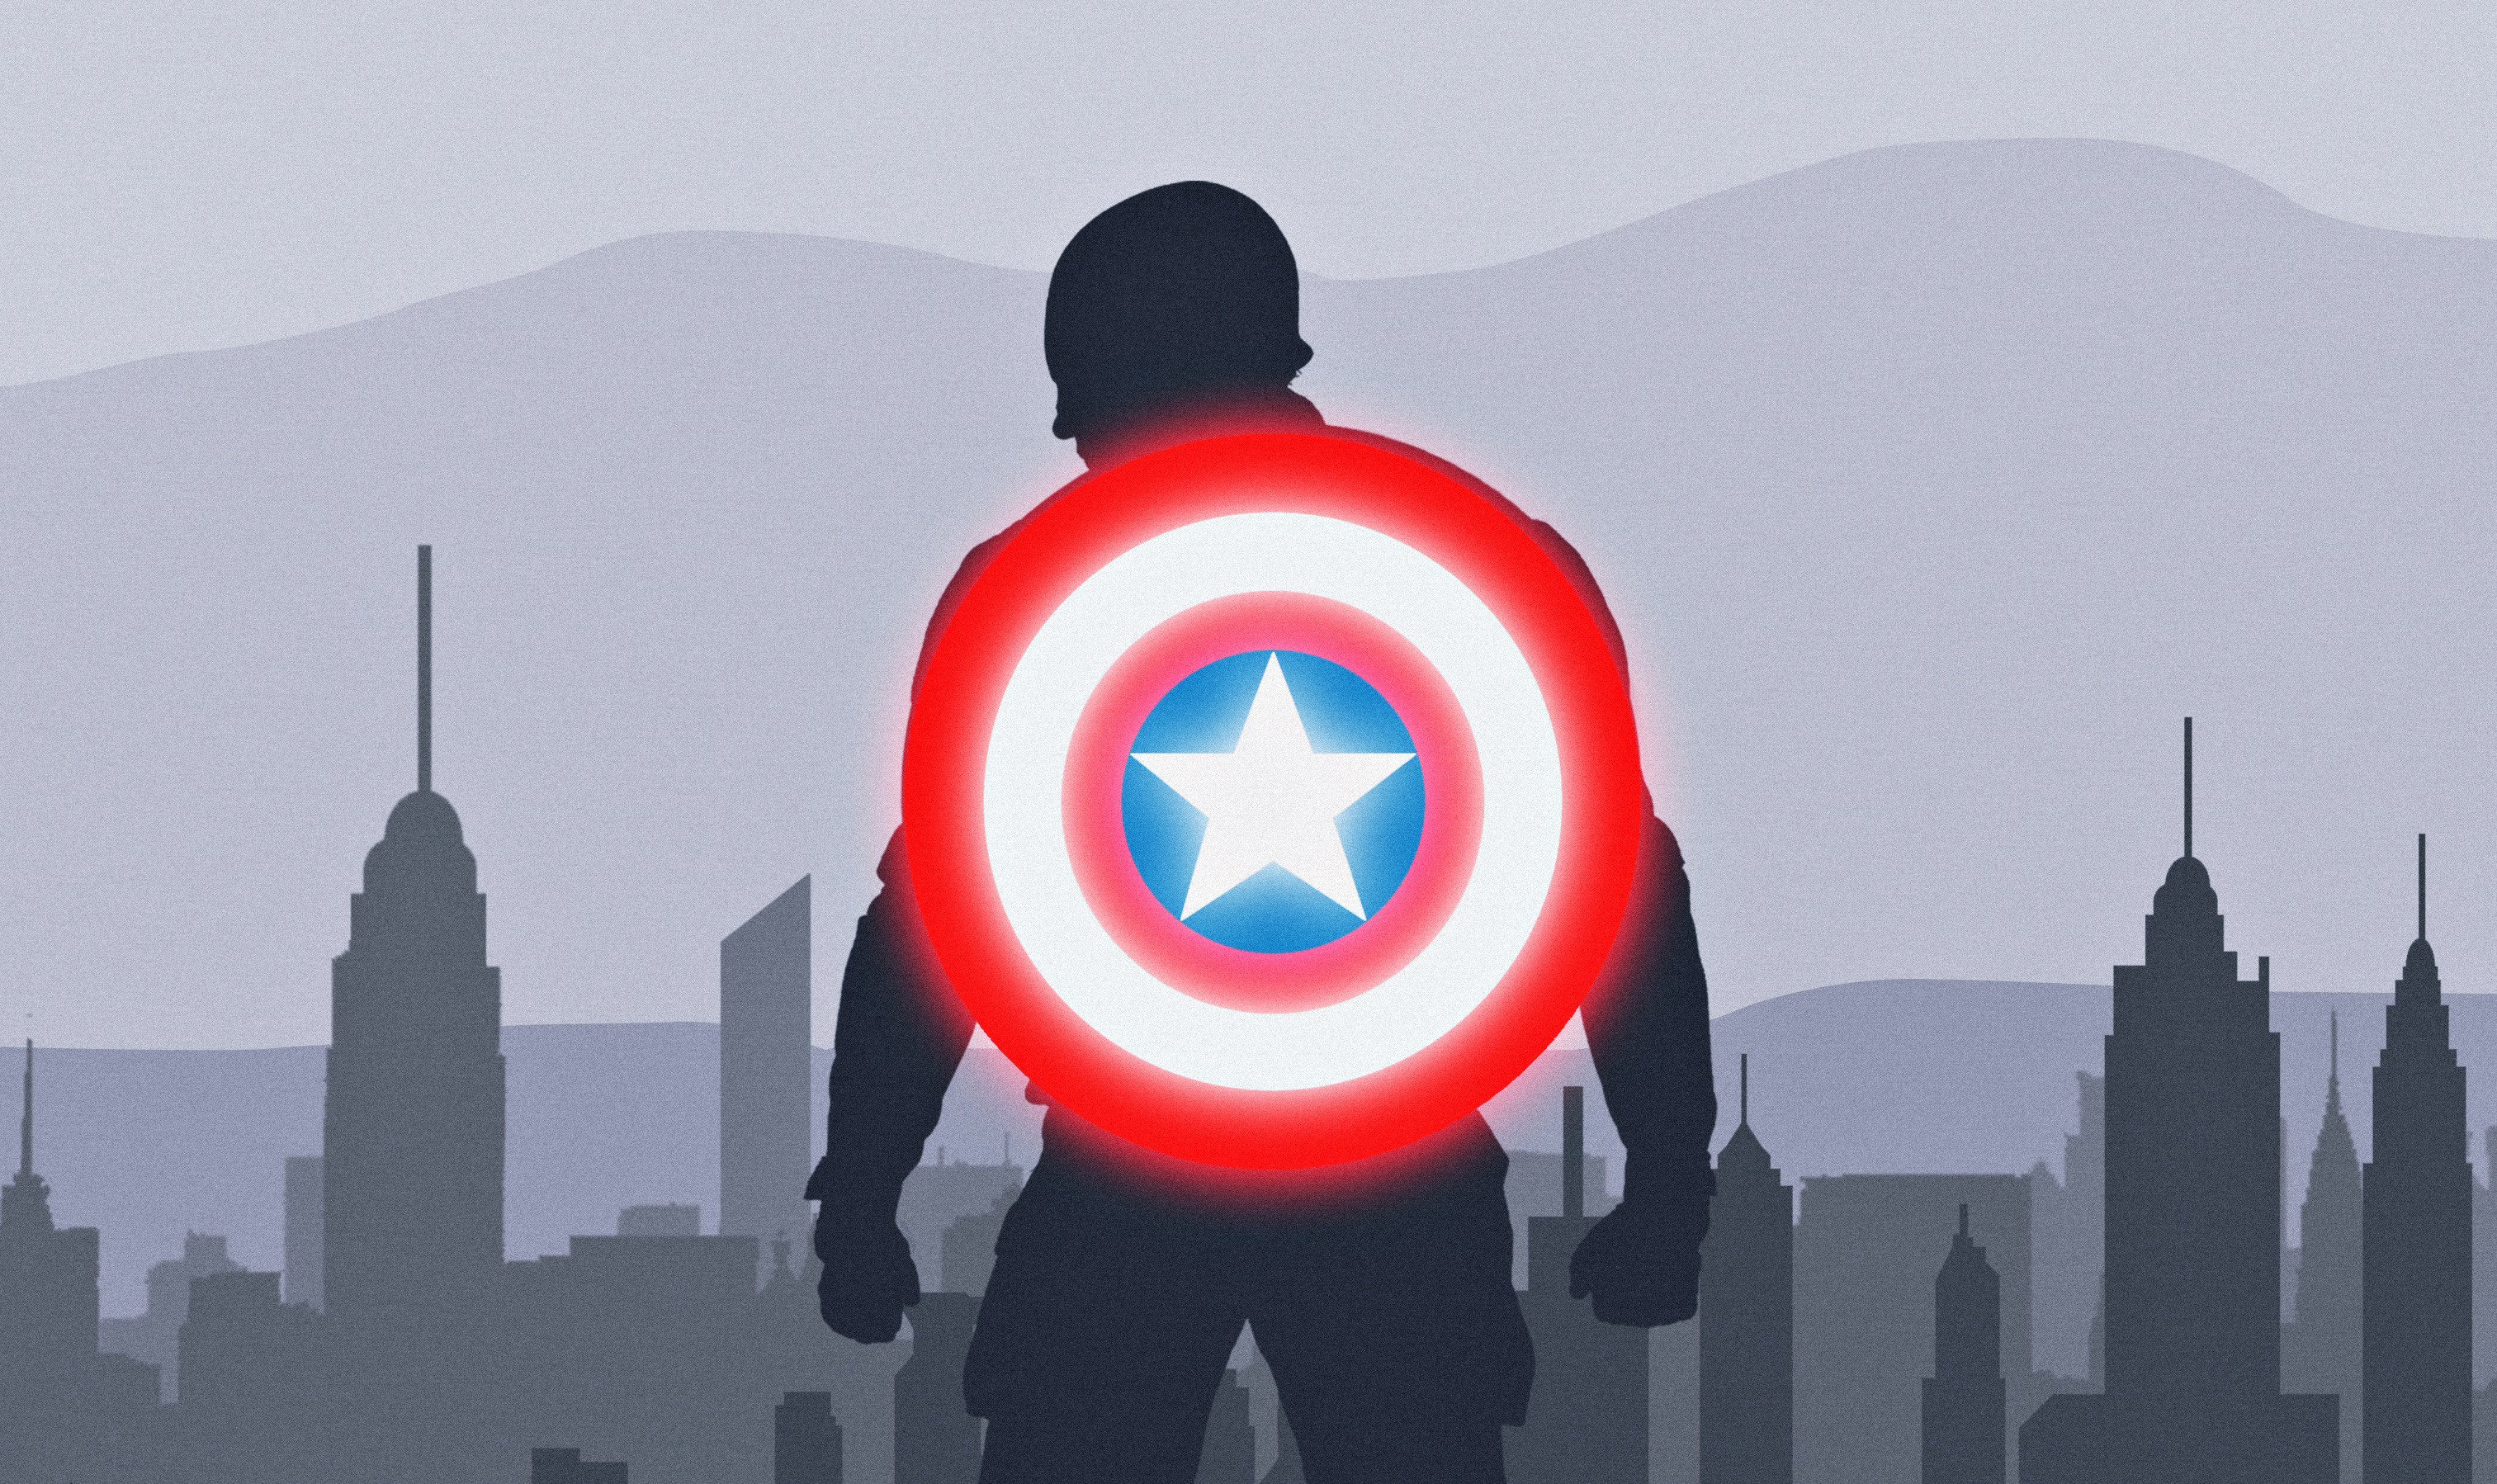 capitán américa fondo de pantalla,superhéroe,capitan america,personaje de ficción,ilustración,animación